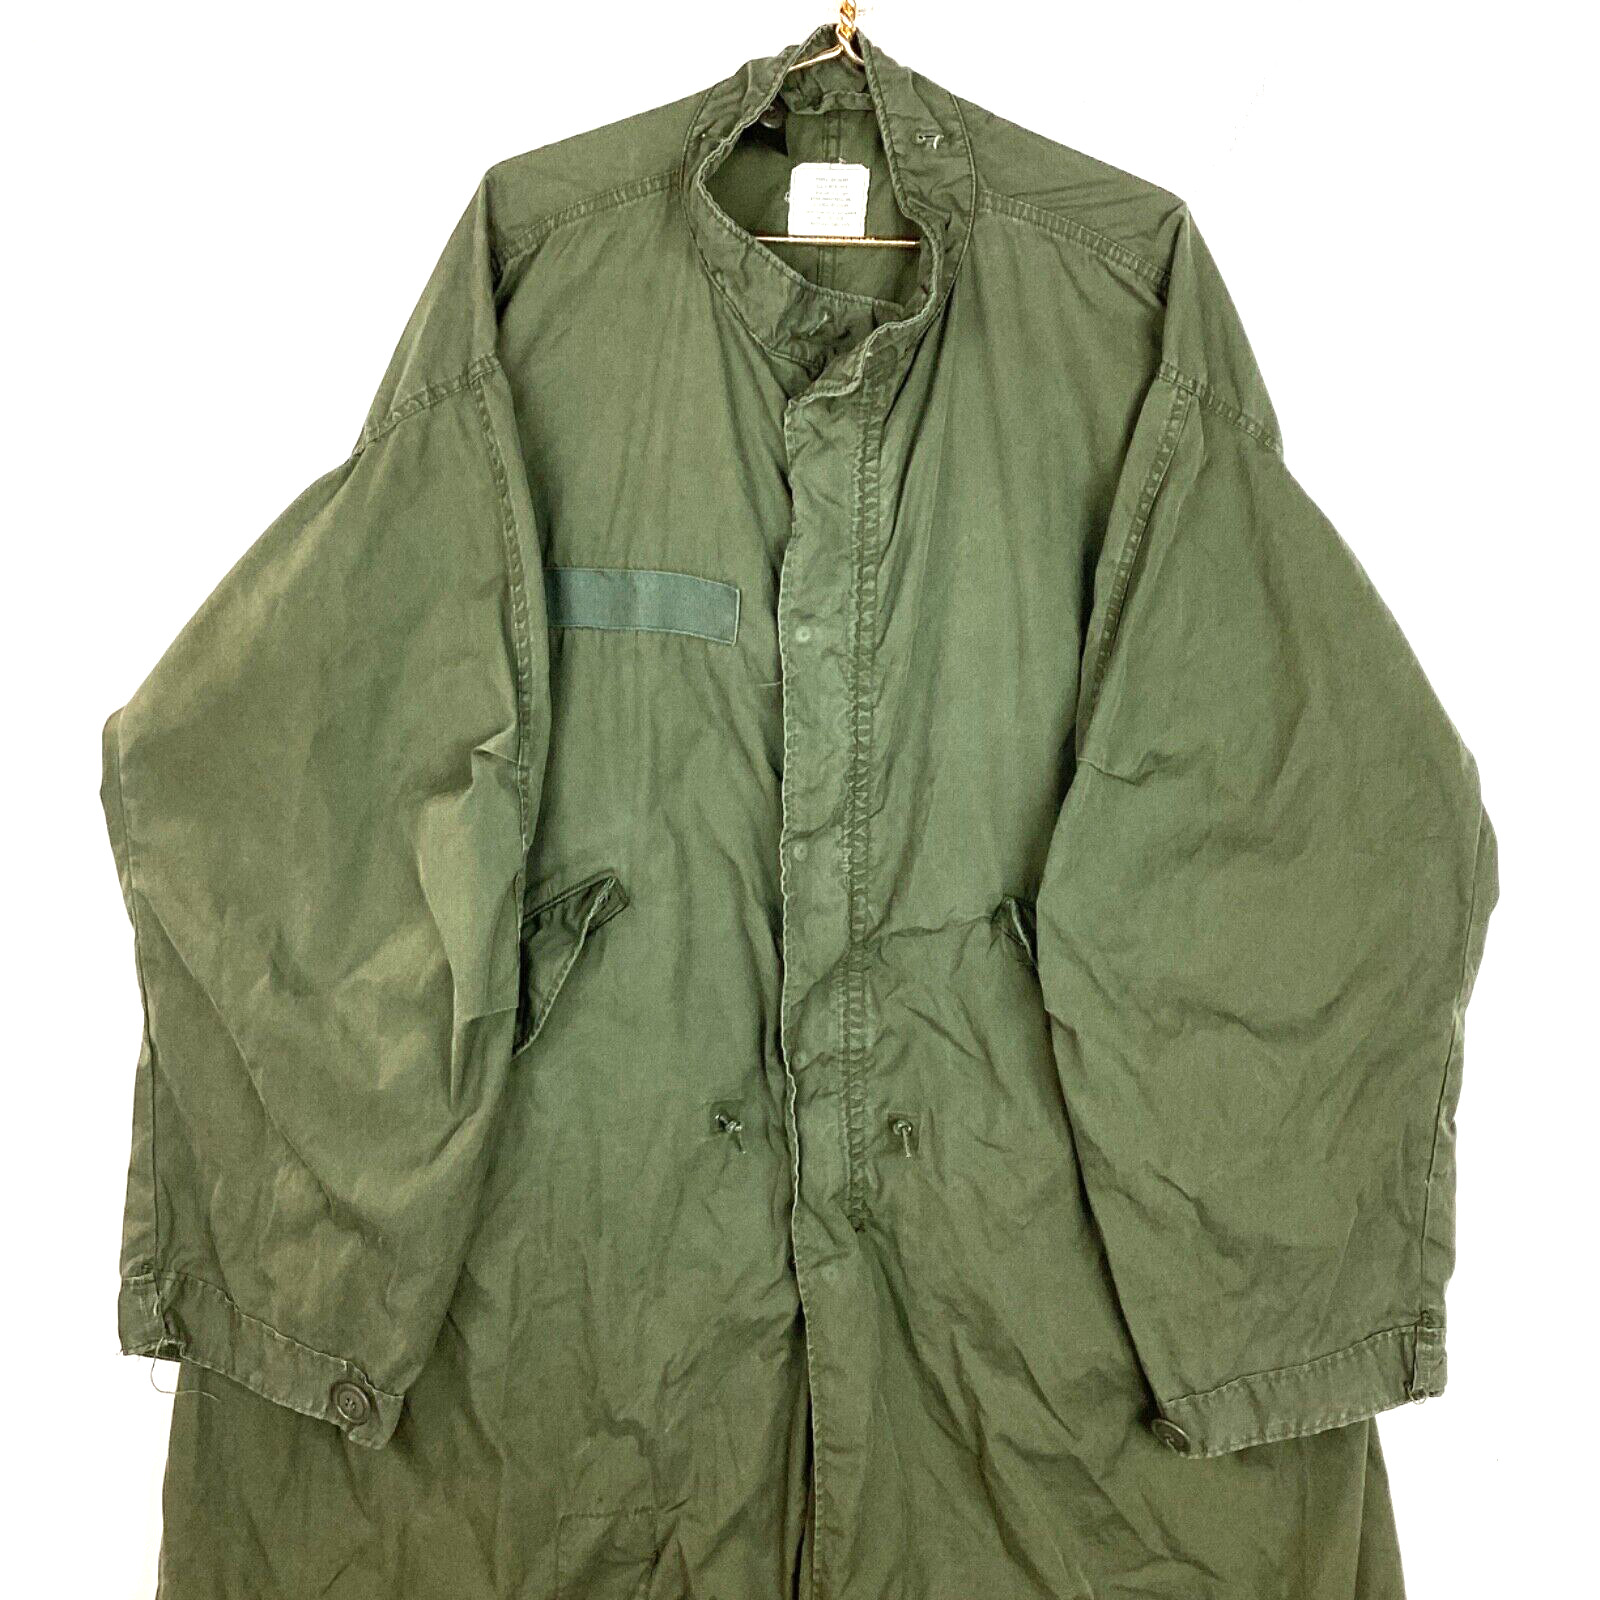 Vintage 1972 Military Parka Jacket Lined Size XL Green Vietnam Era 70s